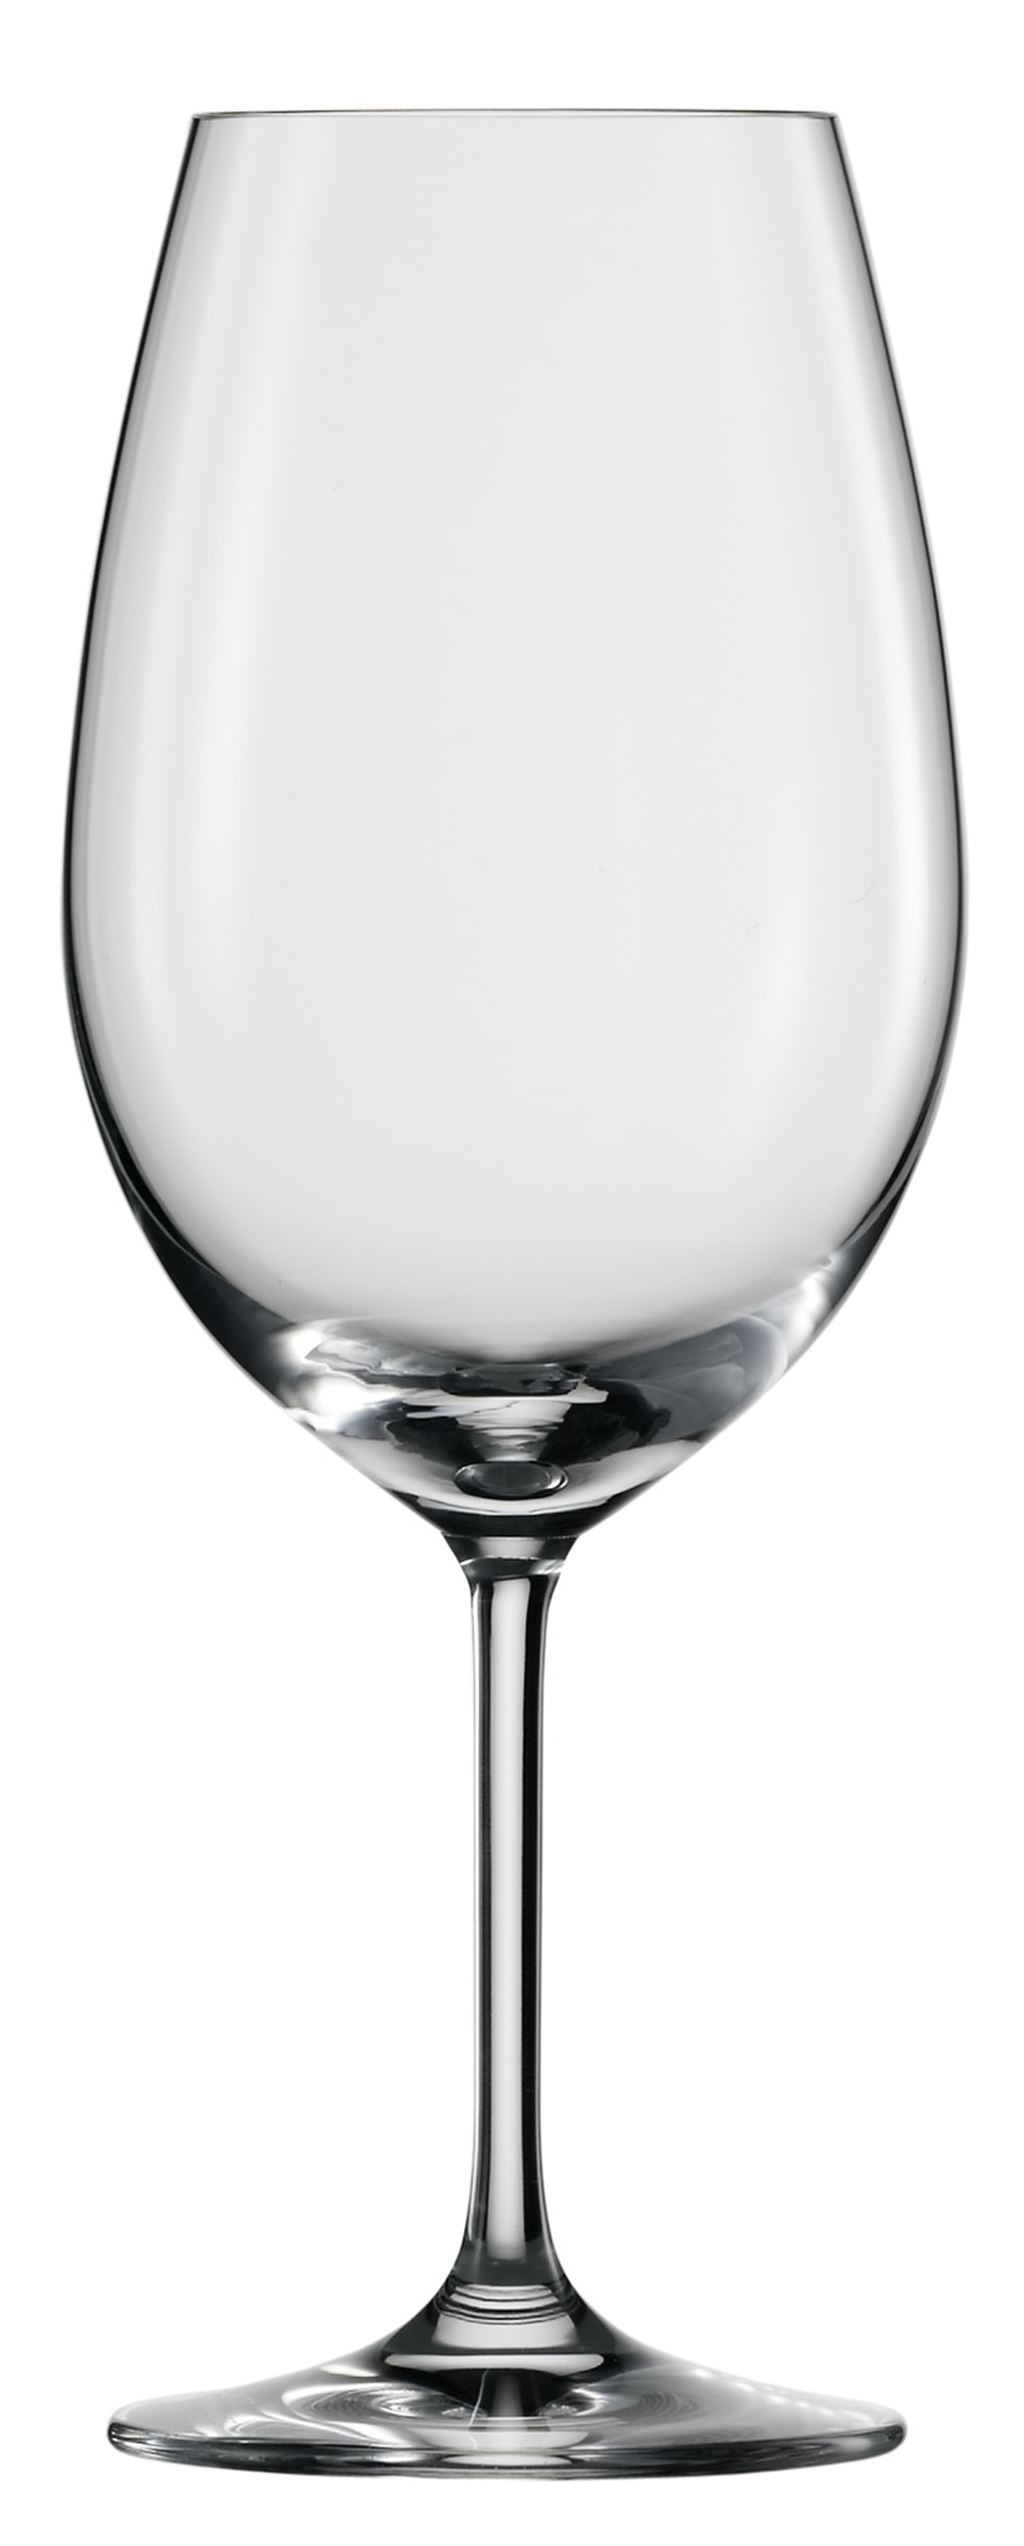 Schott zwiesel, ivento, kozarec za vino bordojec, 633 ml, 1 kos